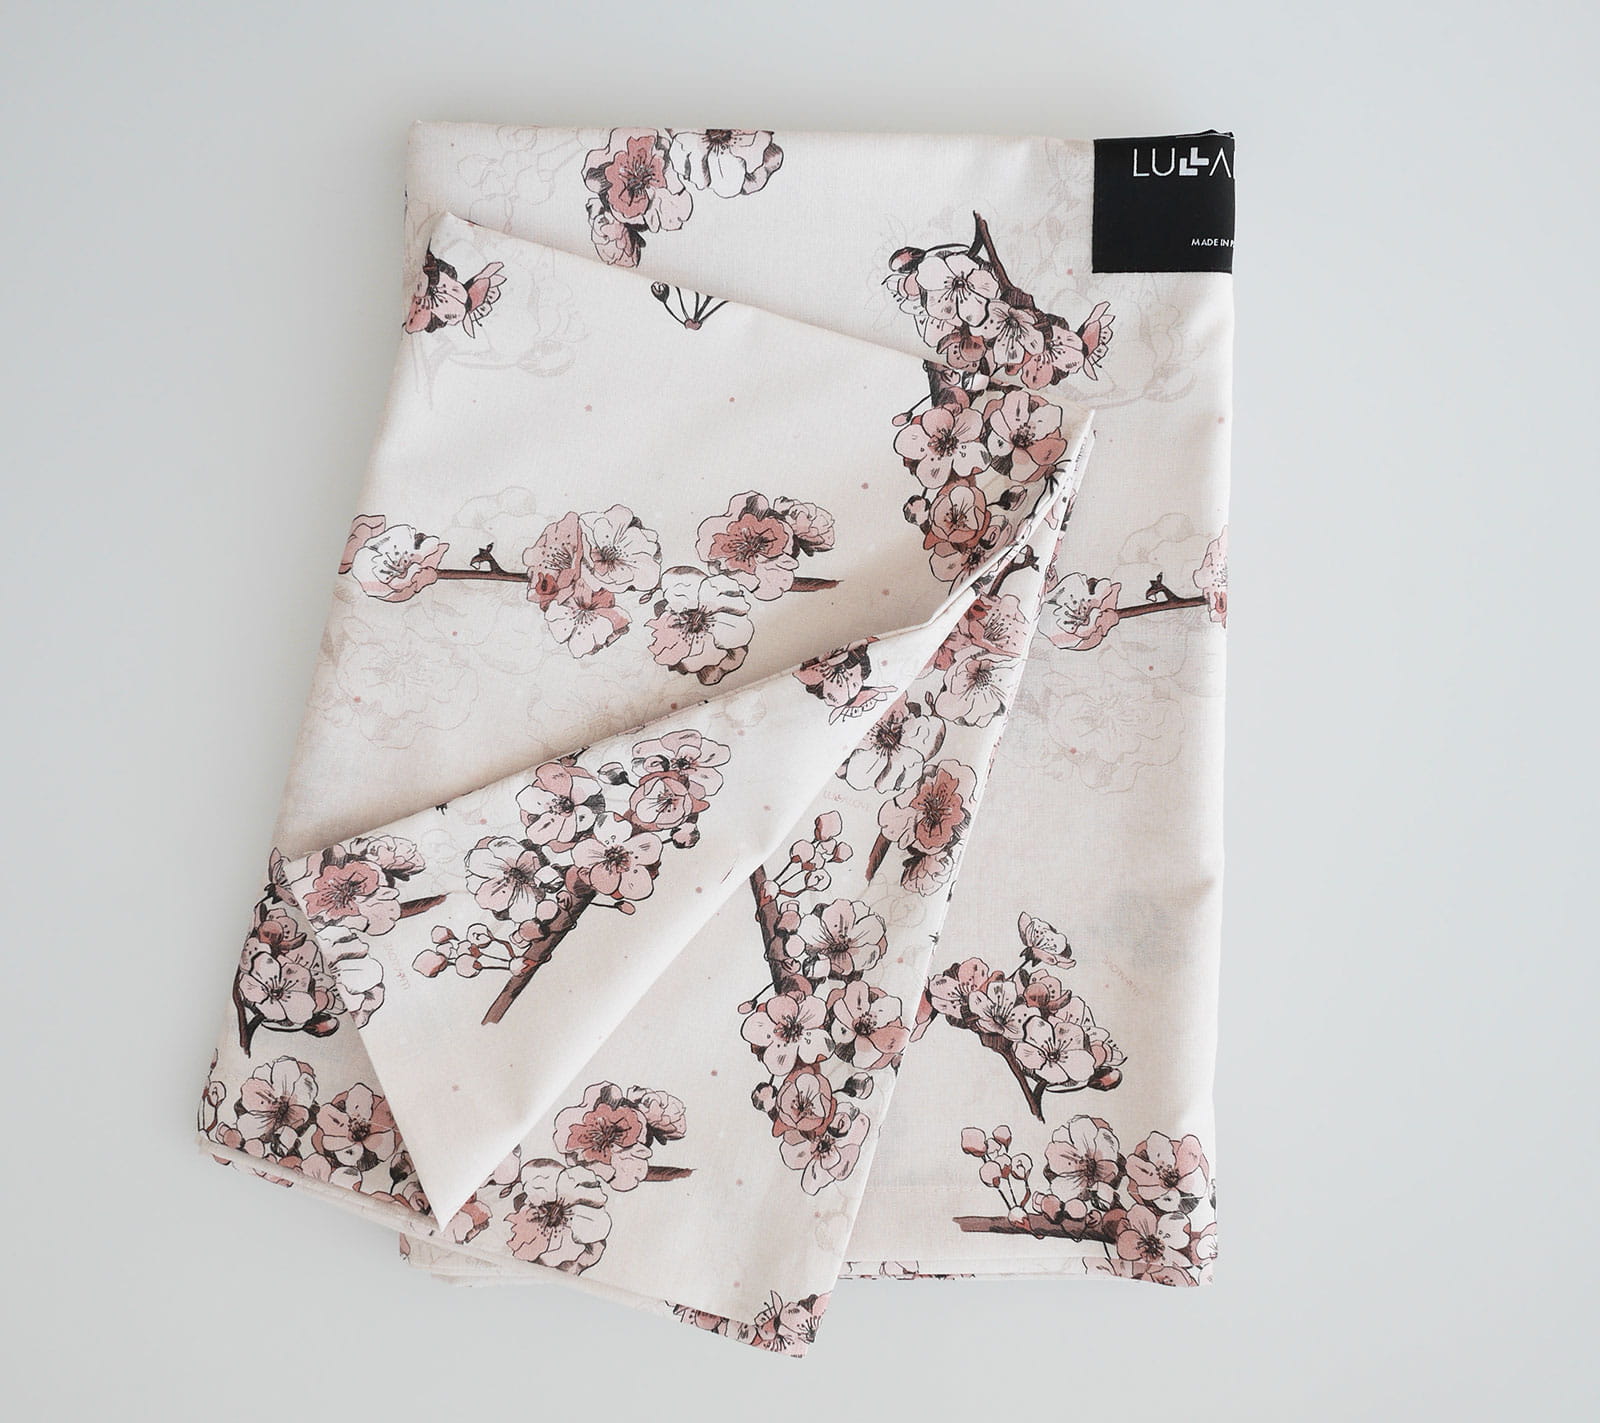 Sakura - Cot bed duvet cover and pillowcase set Bedding Lullalove 